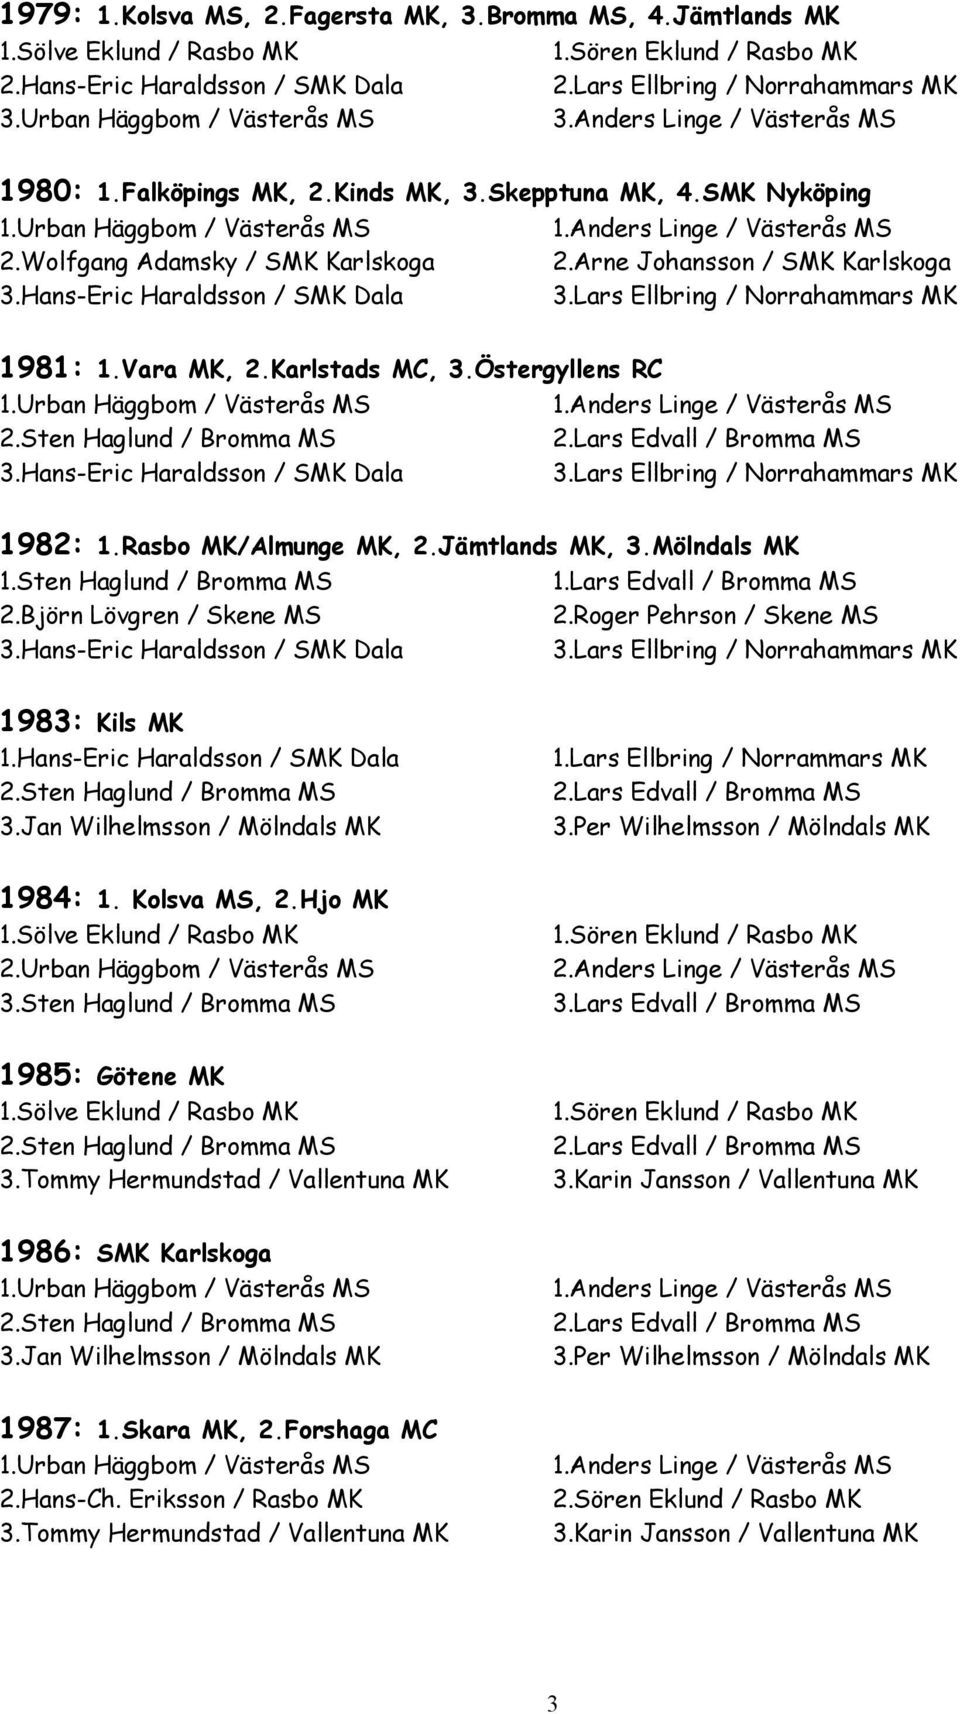 Rasbo MK/Almunge MK, 2.Jämtlands MK, 3.Mölndals MK 1.Sten Haglund / Bromma MS 1.Lars Edvall / Bromma MS 2.Björn Lövgren / Skene MS 2.Roger Pehrson / Skene MS 1983: Kils MK 1.